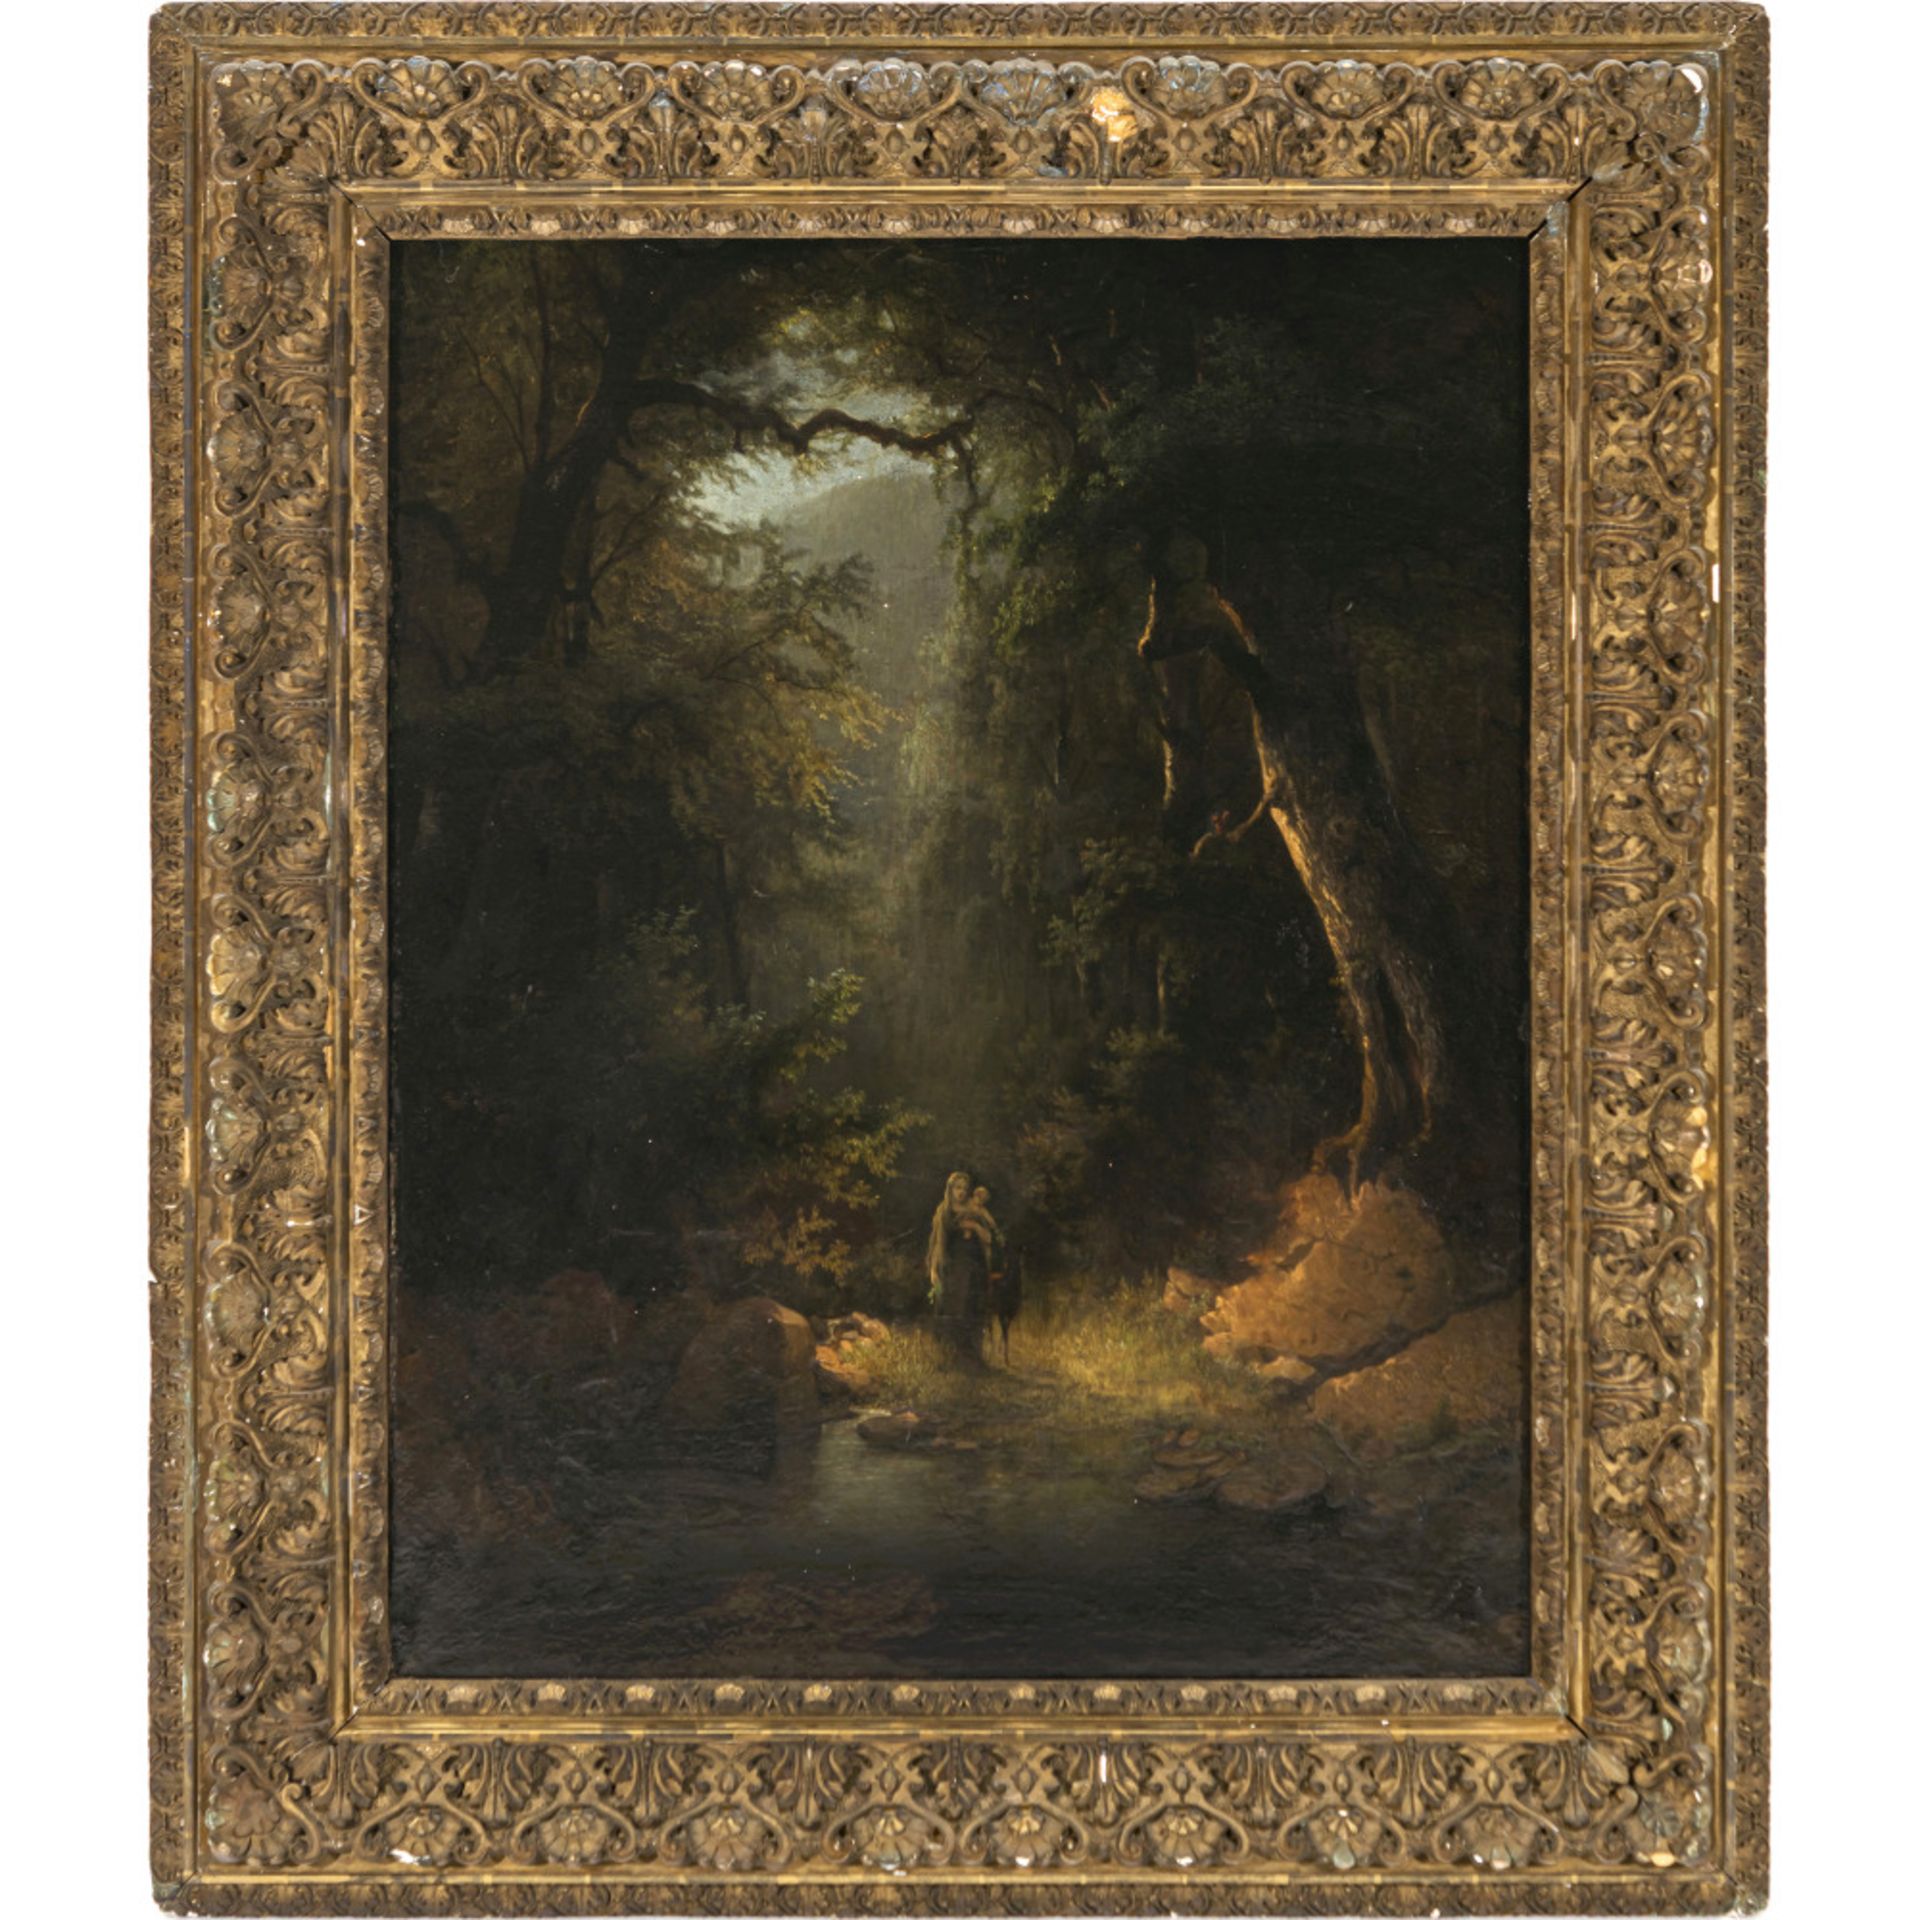 Edmund Koken - Genoveva in the solitude of the forest - Image 2 of 3